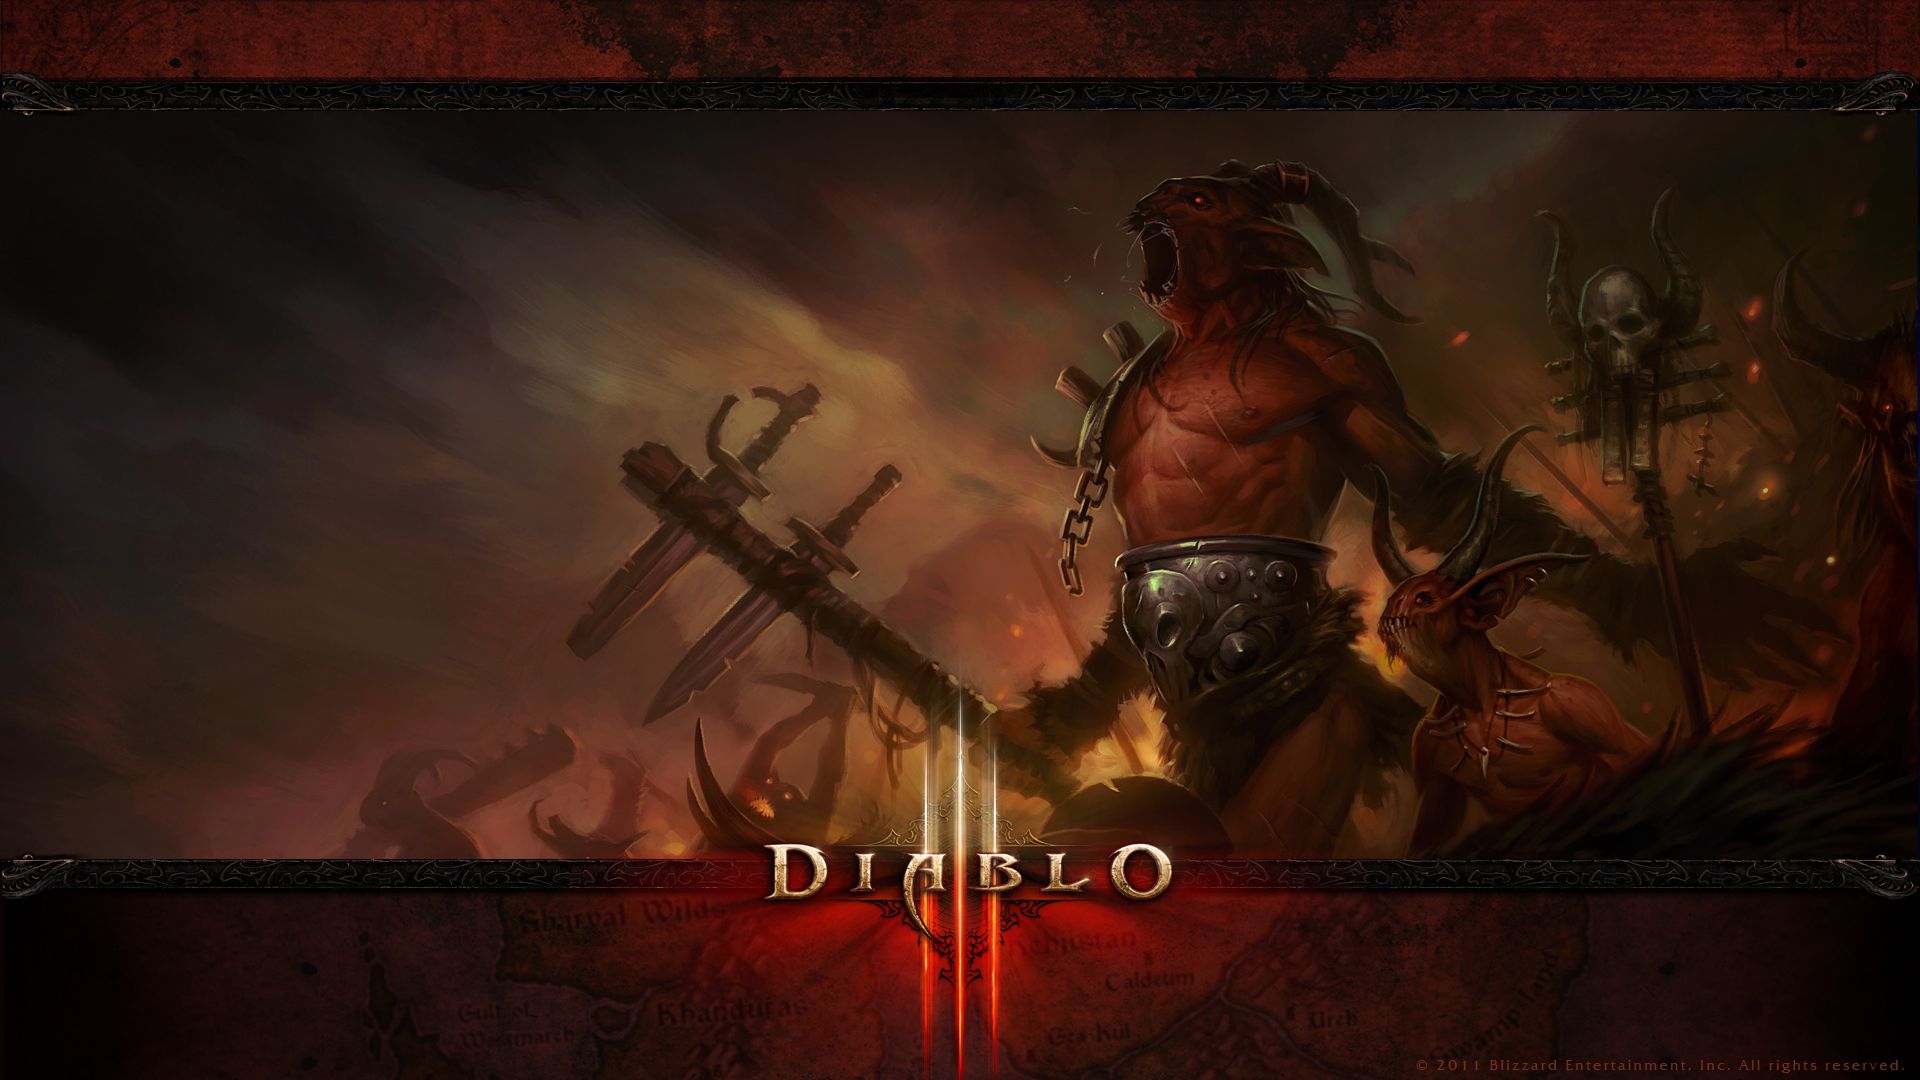  Diablo 3 1920x1080 Hintergrundbild 1920x1080. Diablo 3 Demon Army wallpaper. Diablo 3 Demon Army